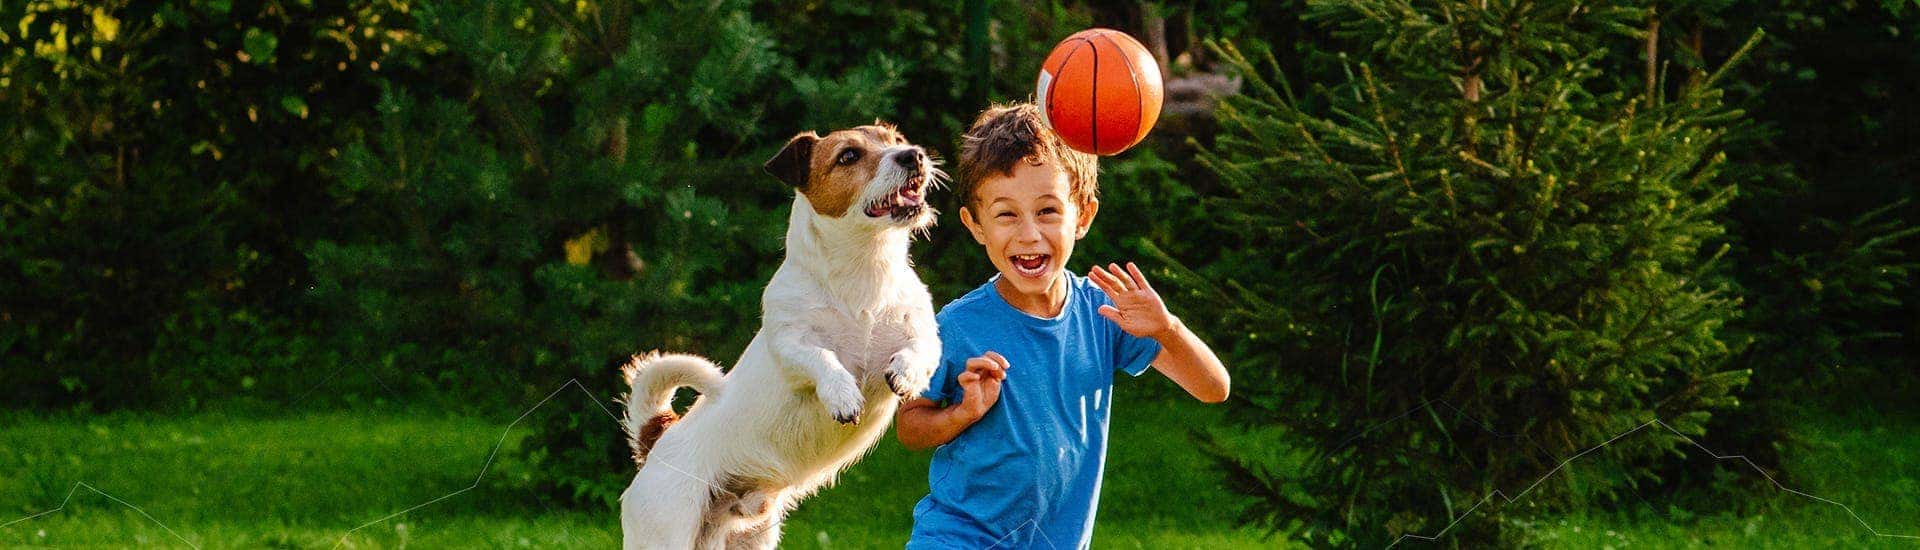 boy with ball and dog